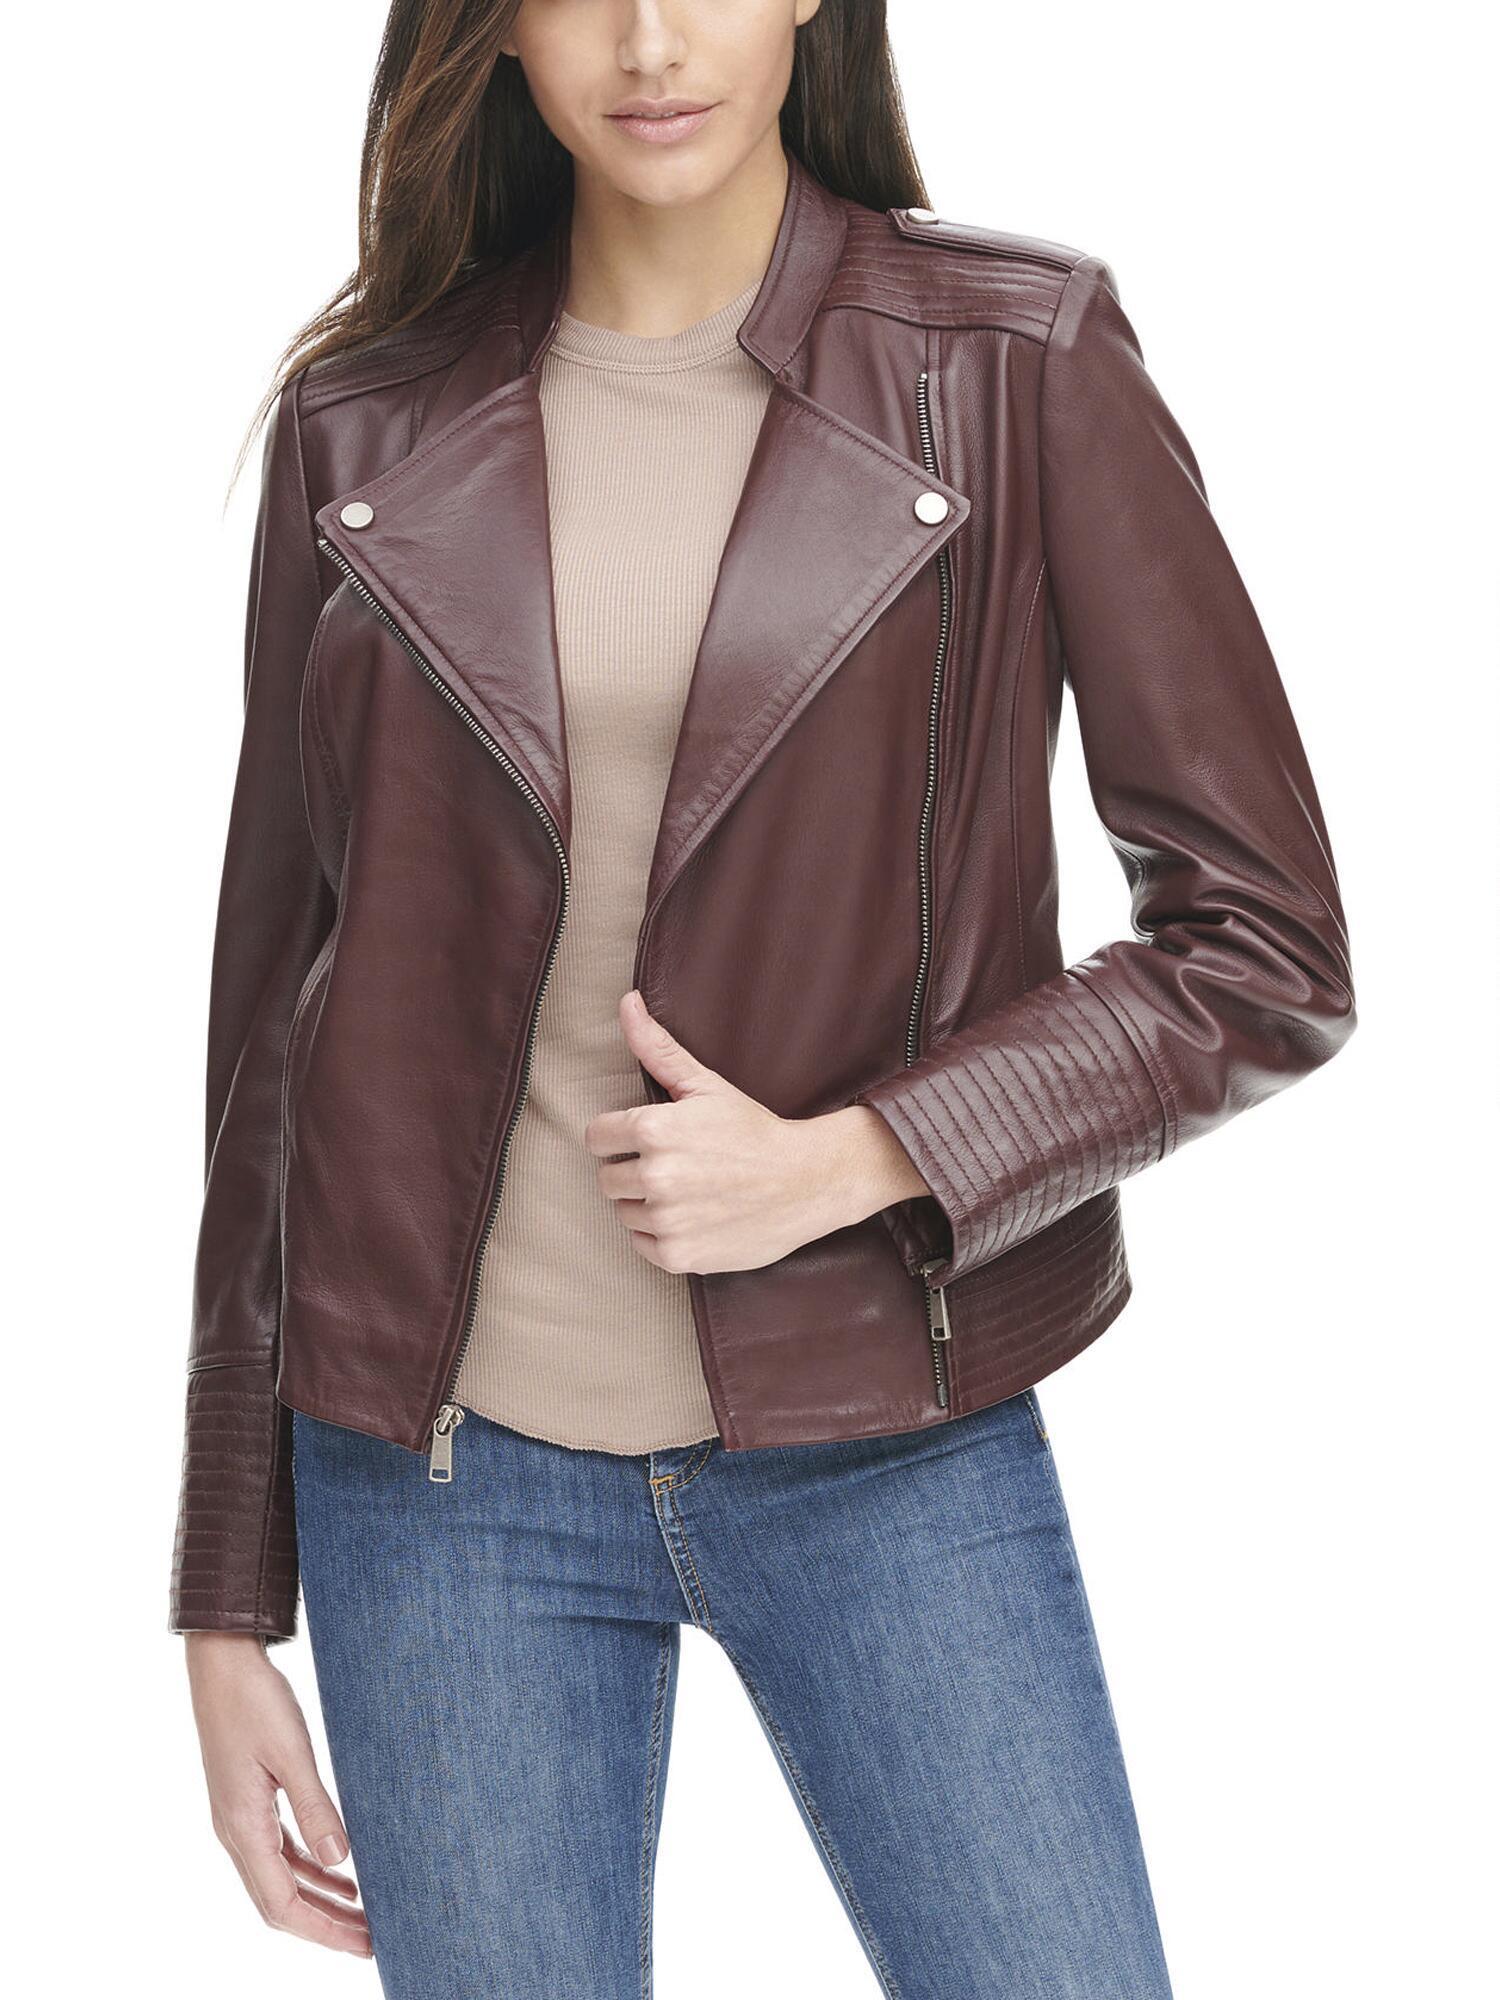 Leather Asymmetrical Jacket - Women's Asymmetrical Leather Jacket 